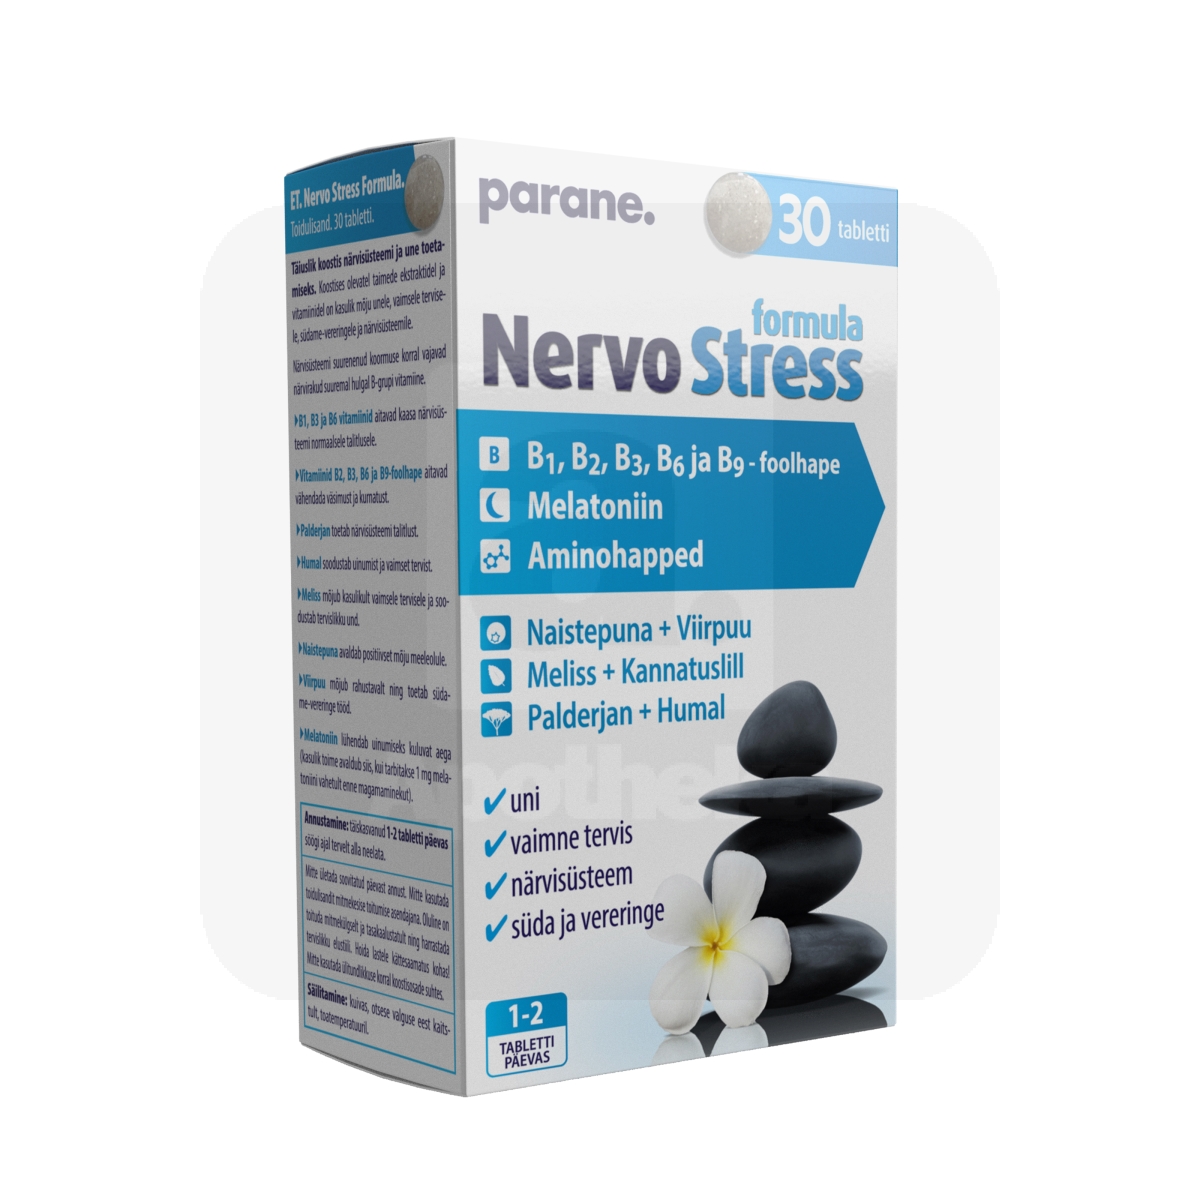 NERVO STRESS FORMULA TBL N30